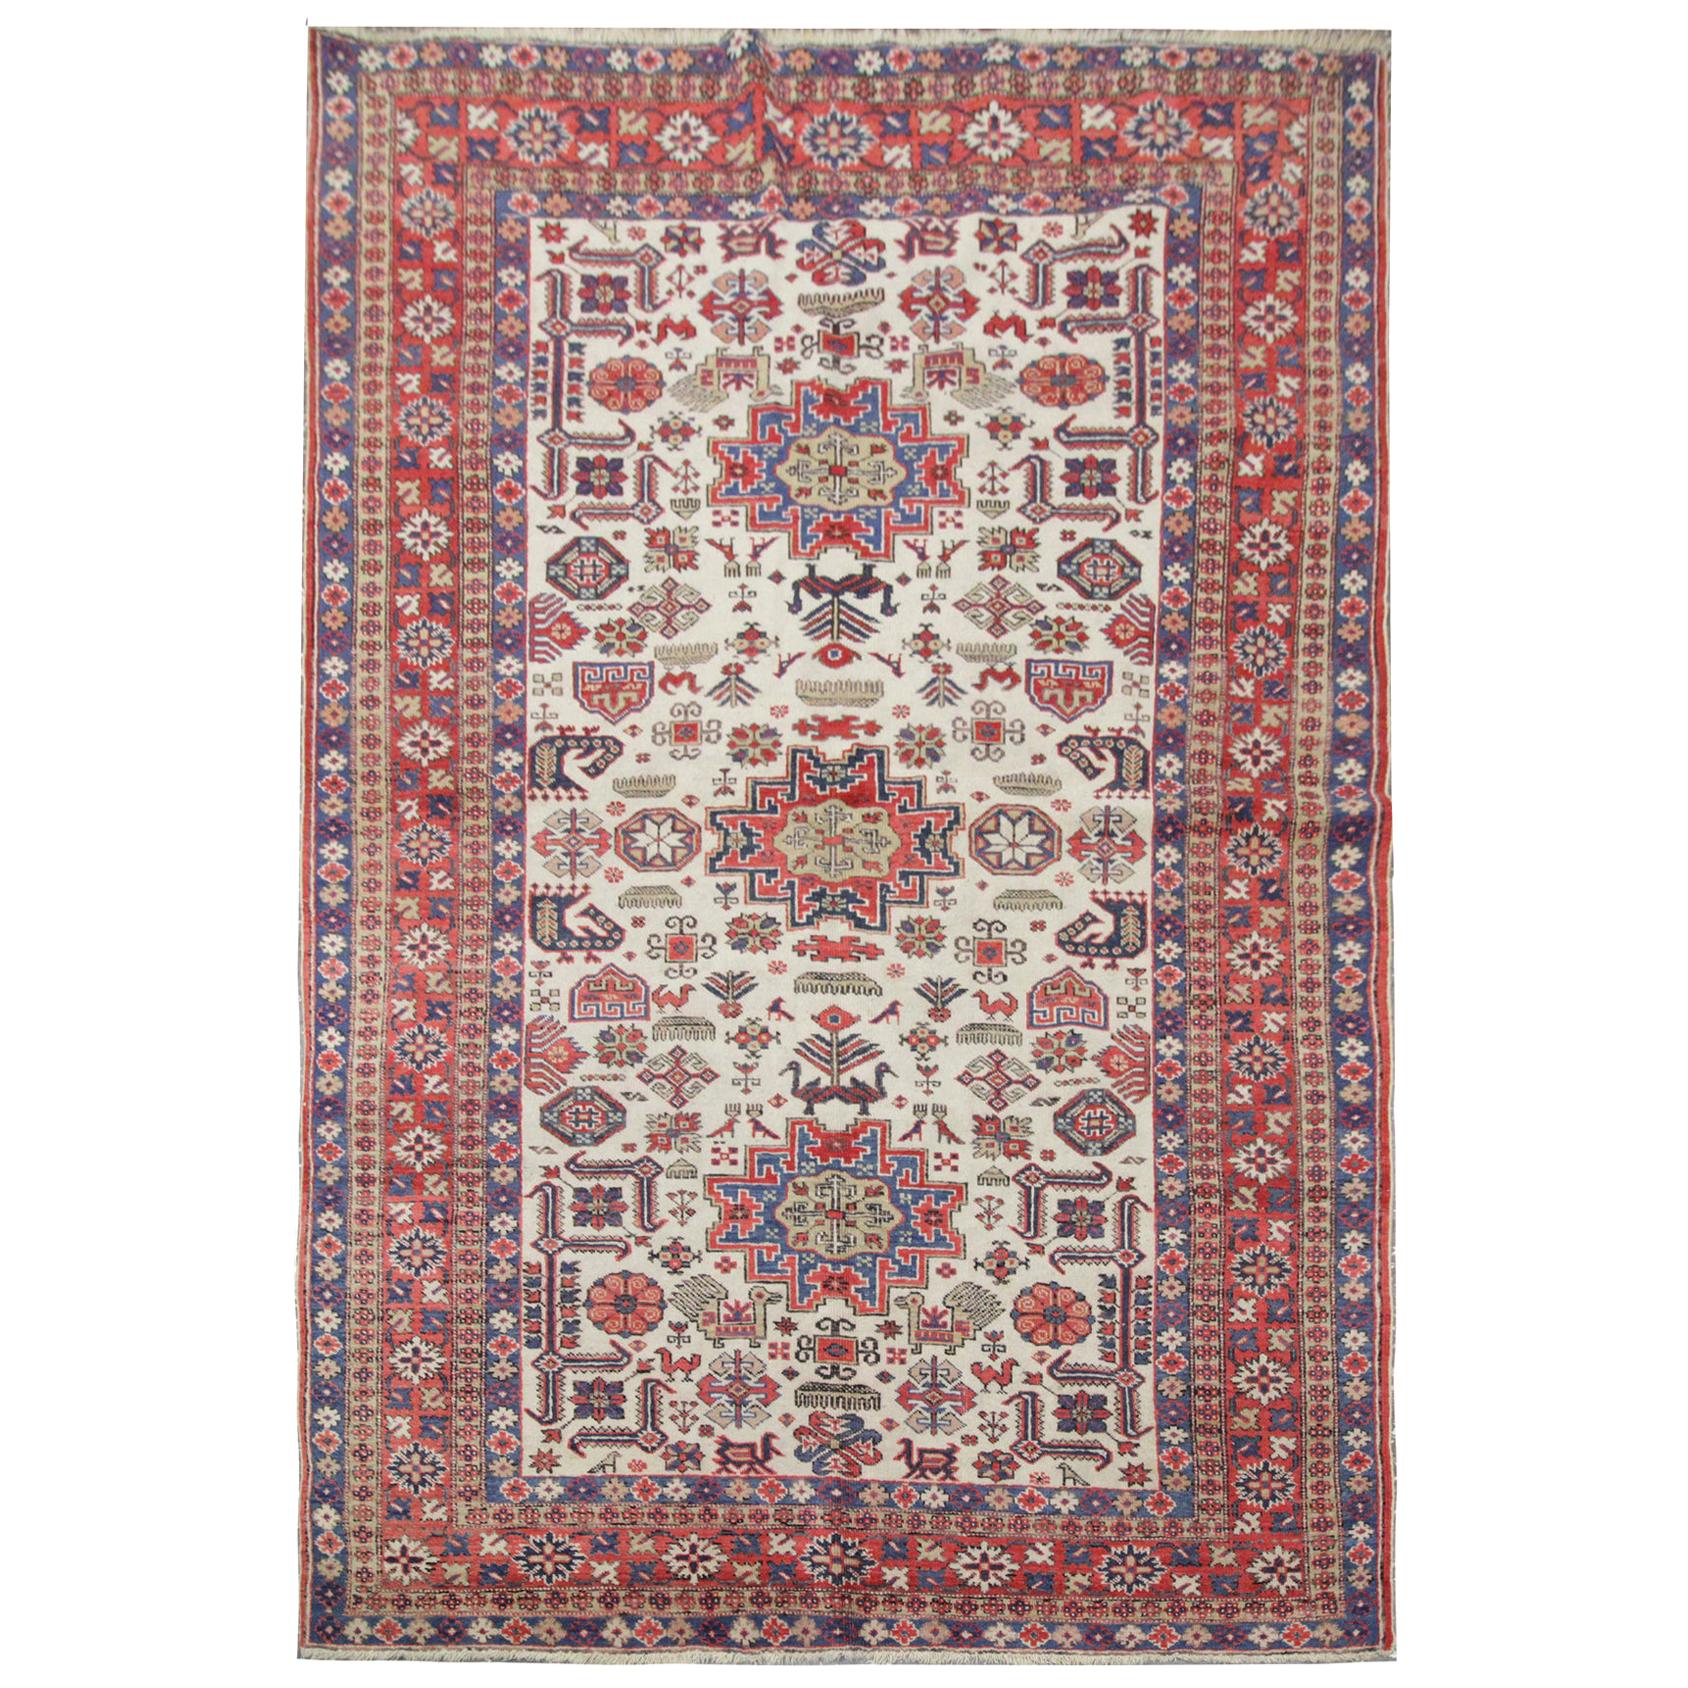 Vintage Handmade Caucasian Carpet, Multicolored Wool Rug for Living Room